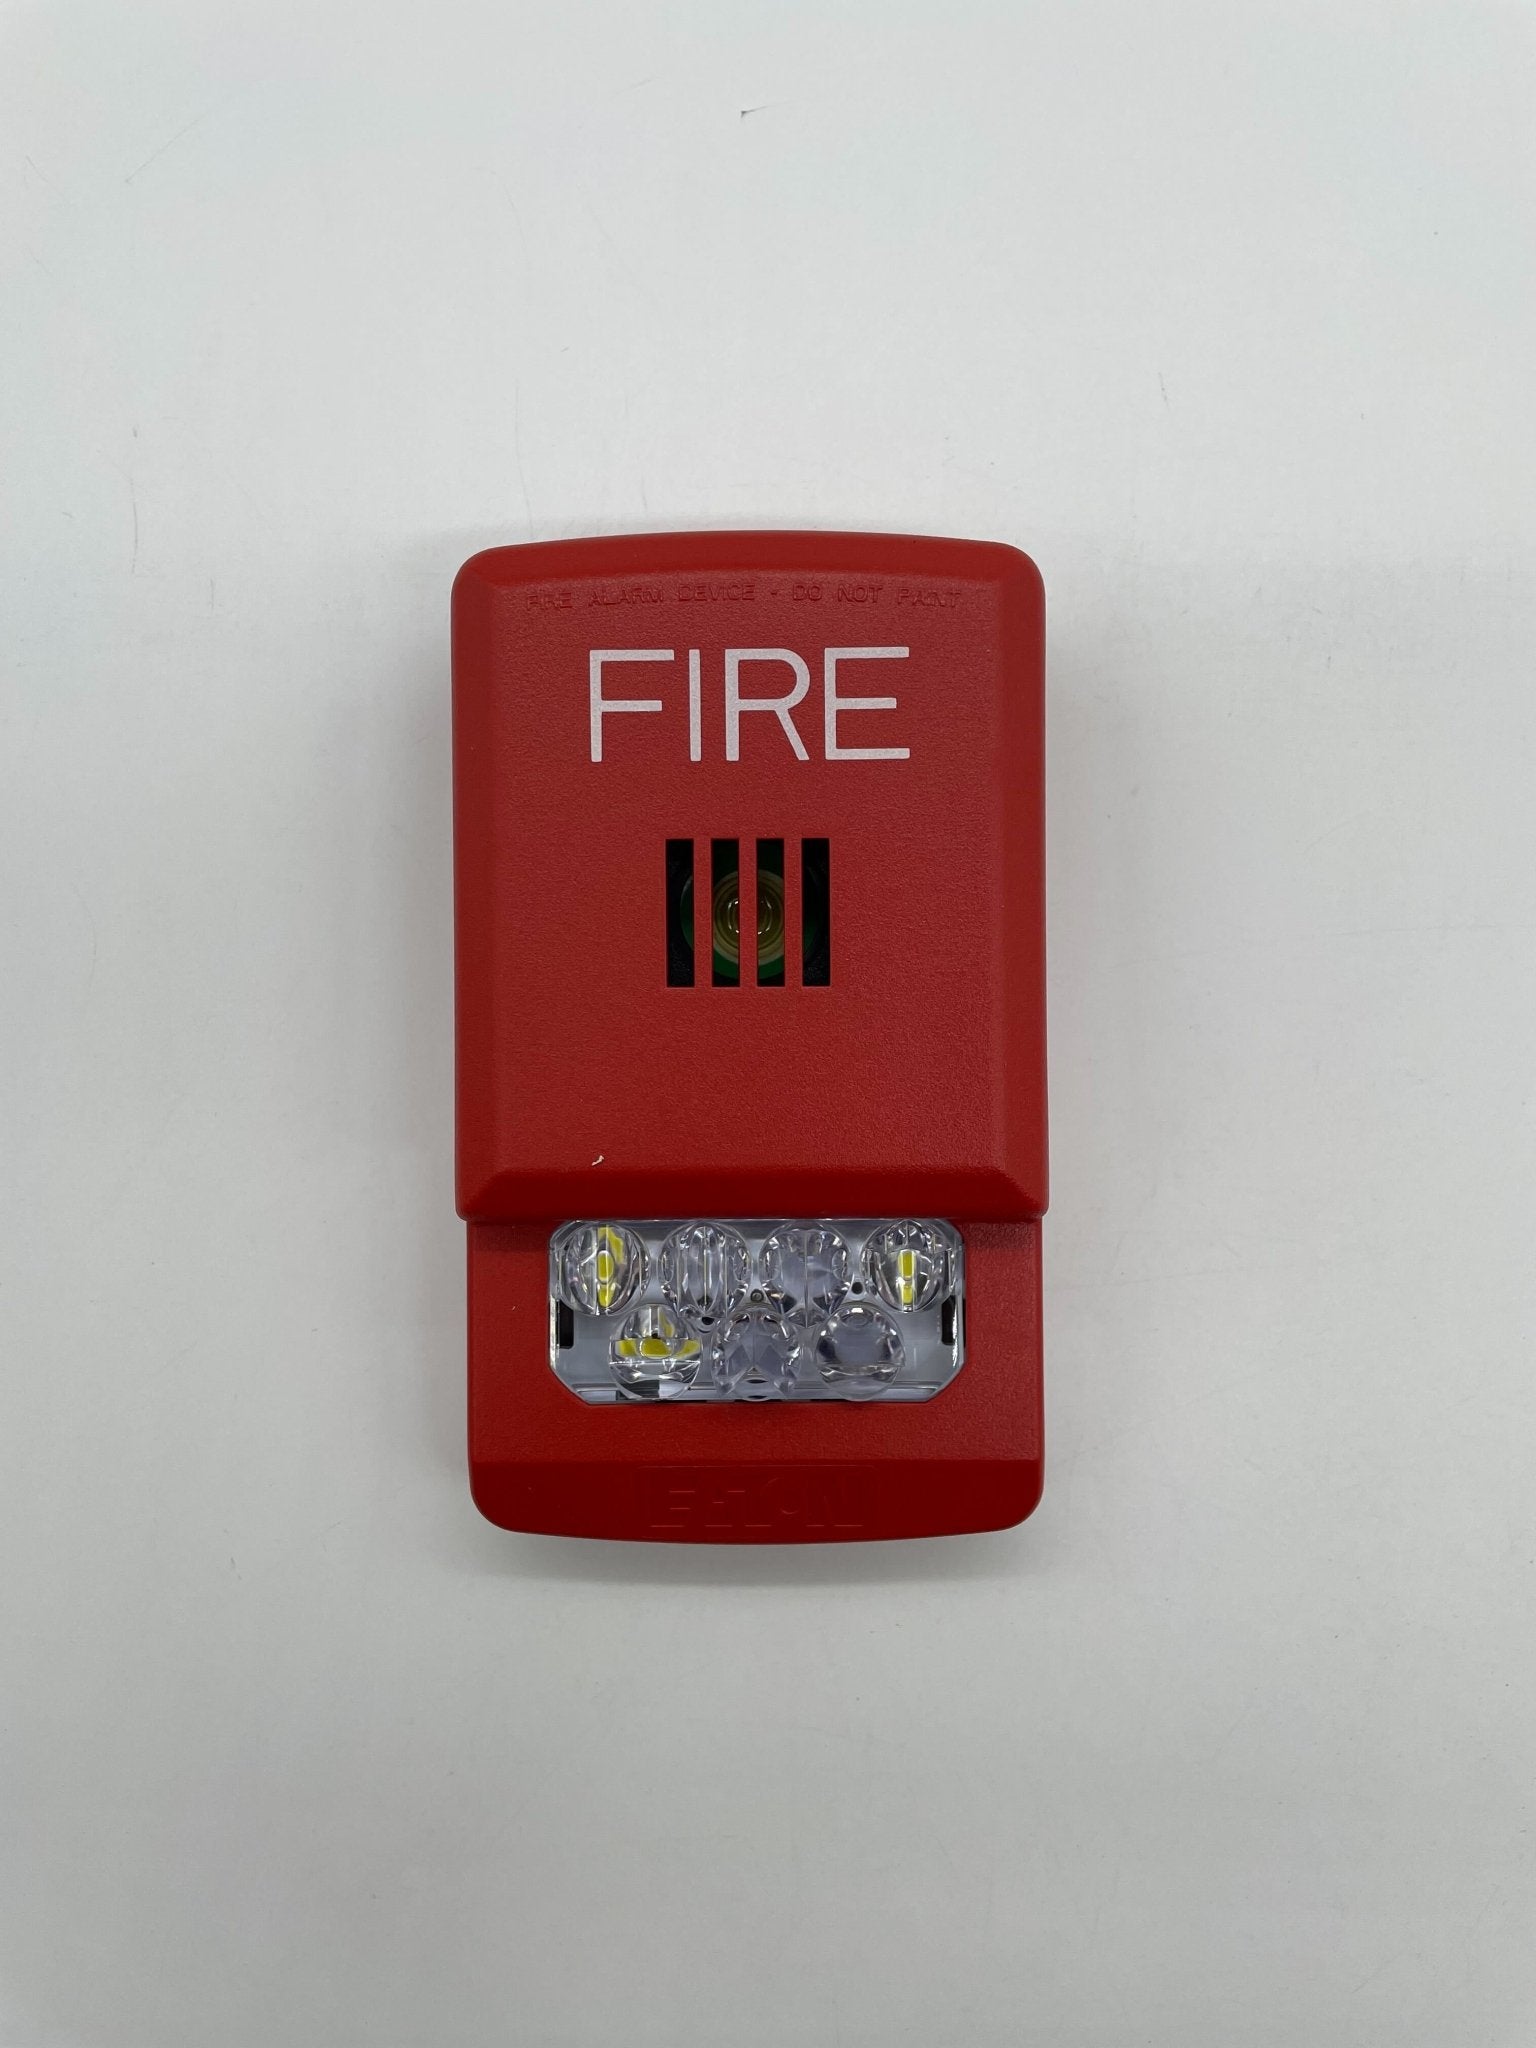 Wheelock ELHSR - The Fire Alarm Supplier